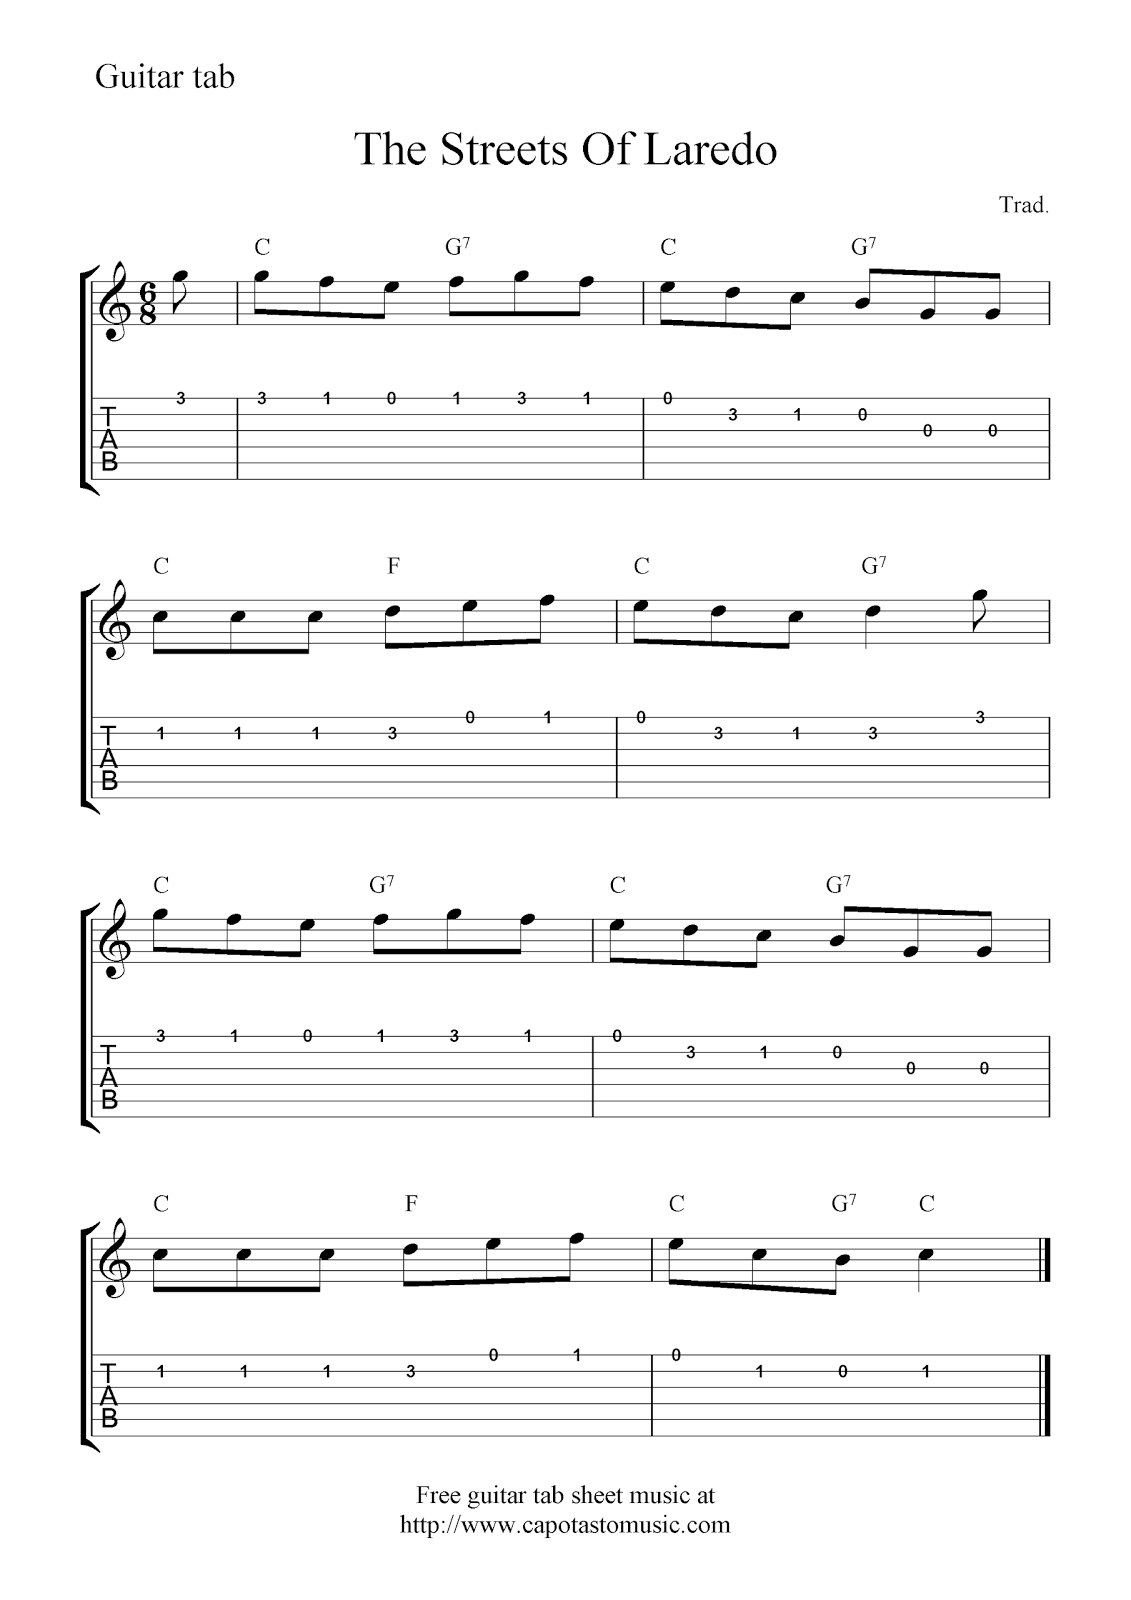 Free Easy Guitar Tabs Sheet Music Score, The Streets Of Laredo - Free Printable Guitar Music